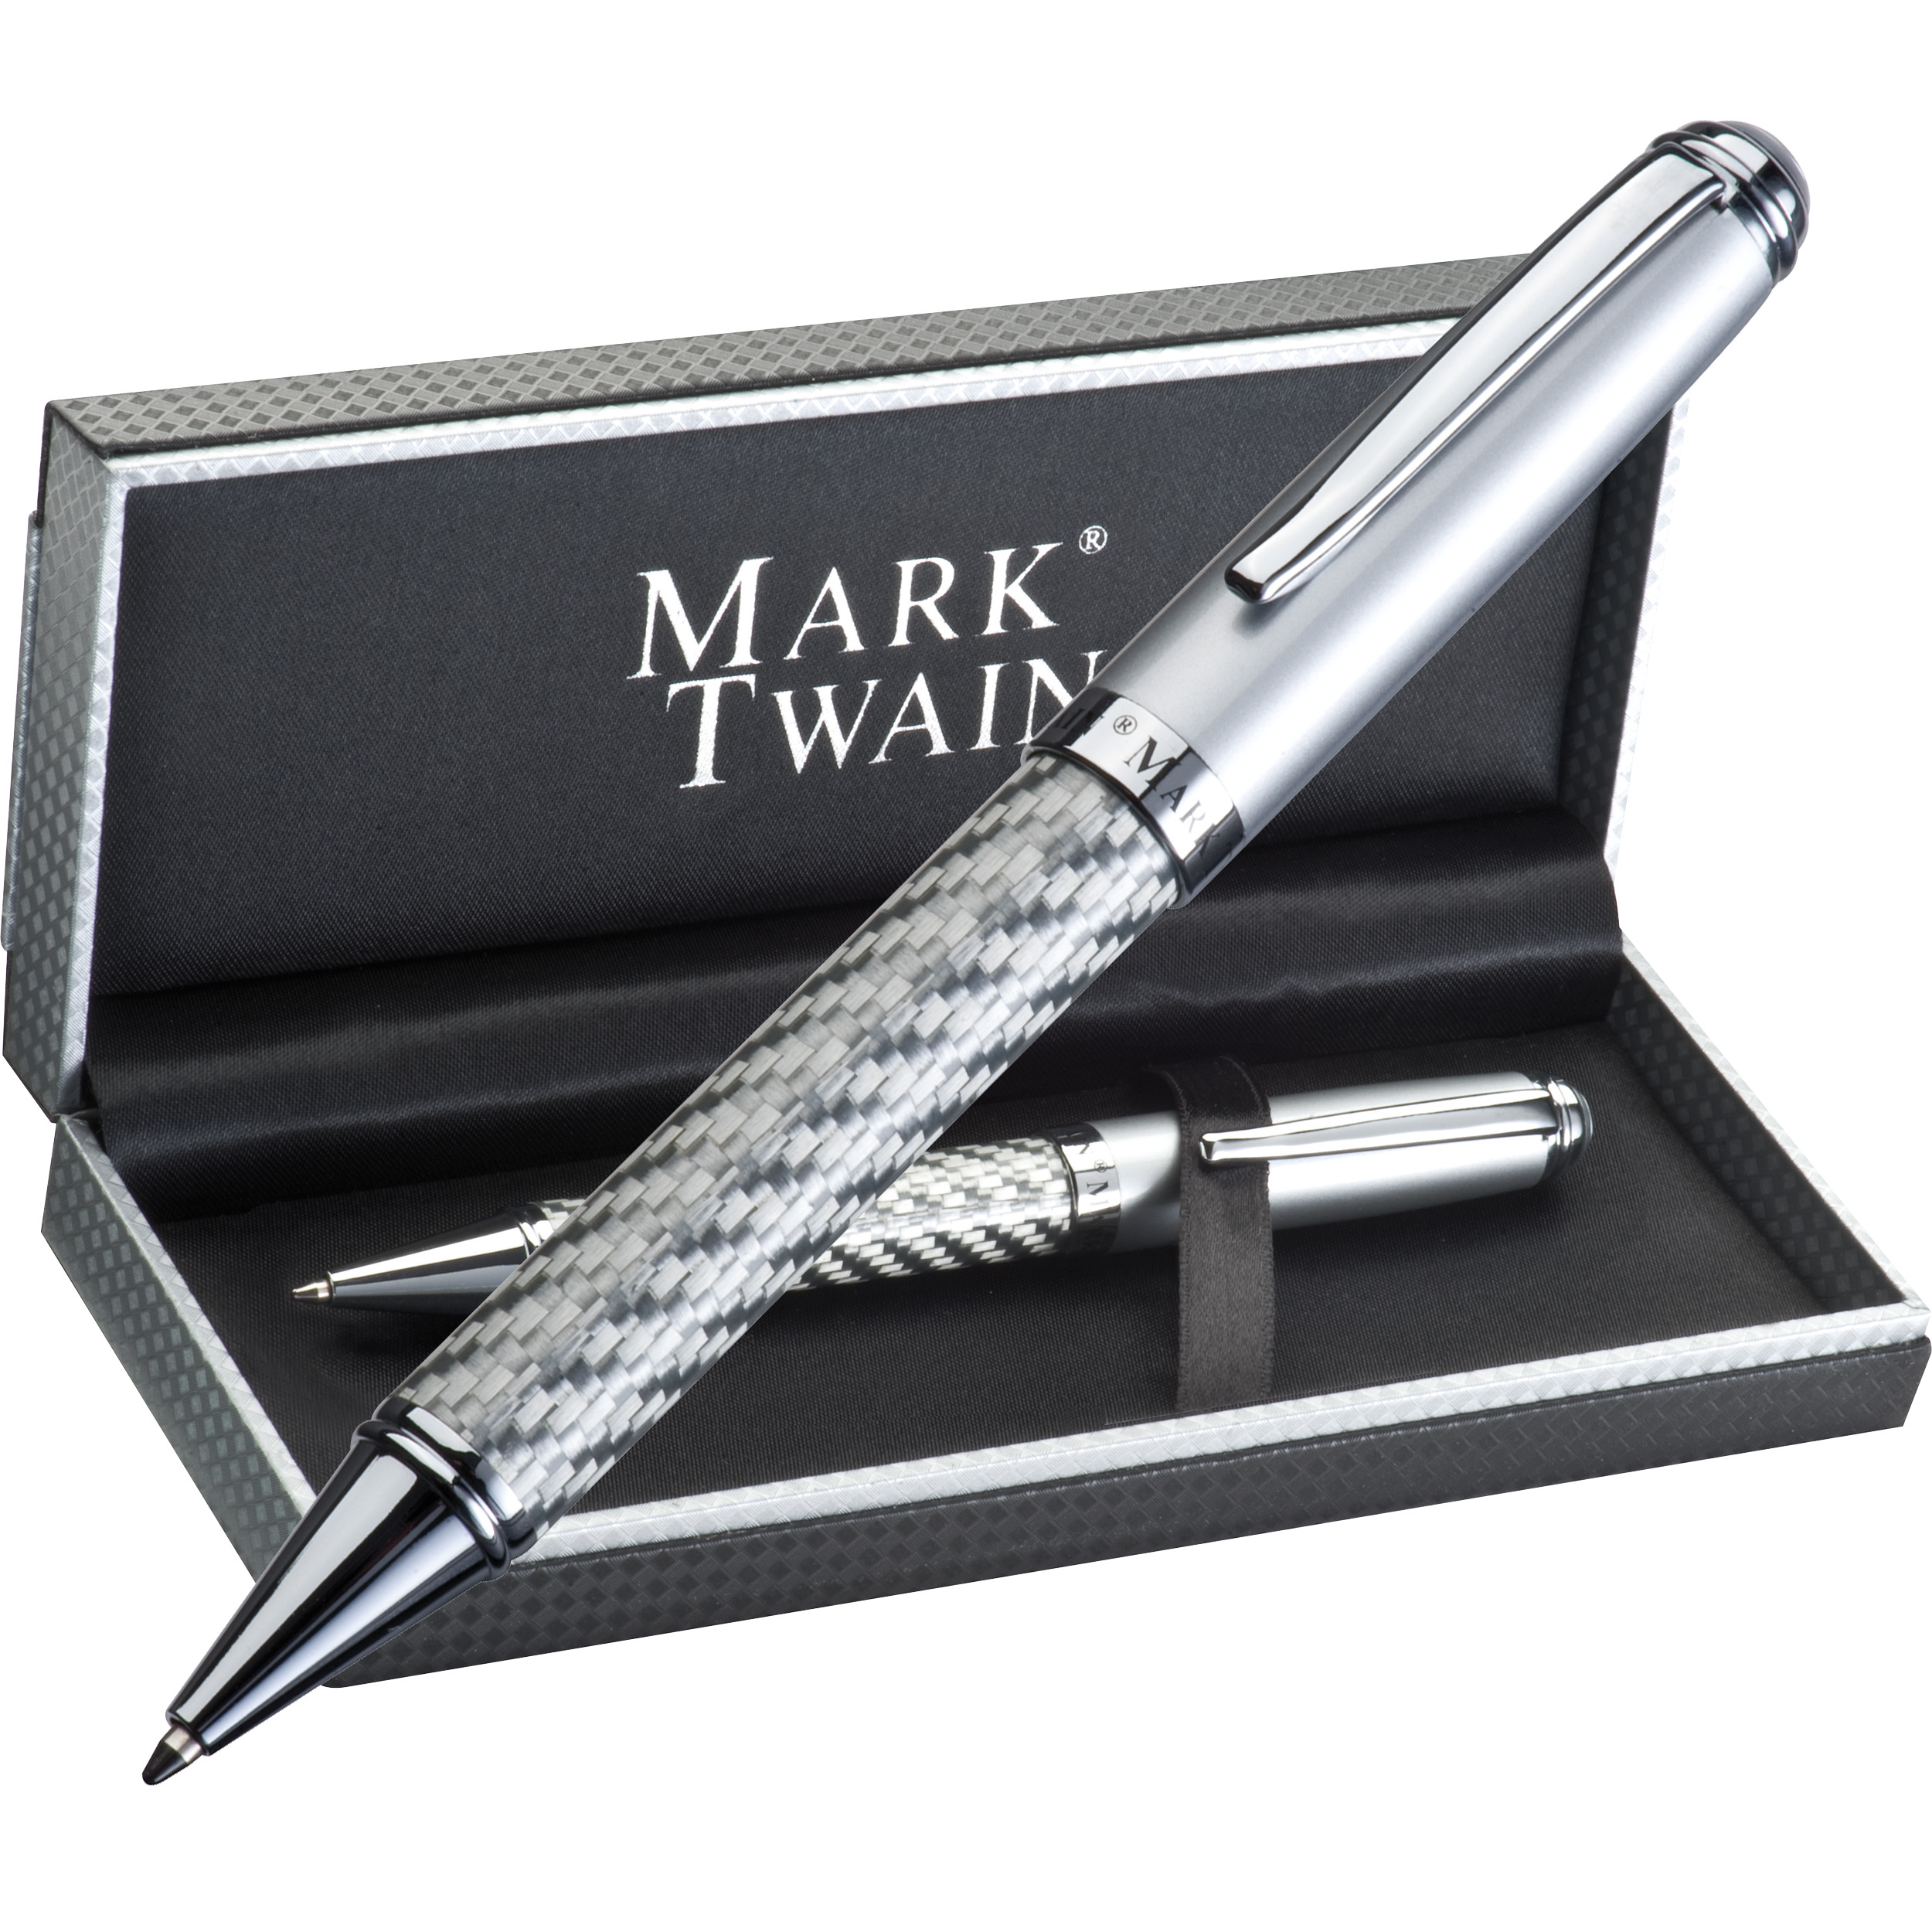 Mark Twain ball pen in carbon design